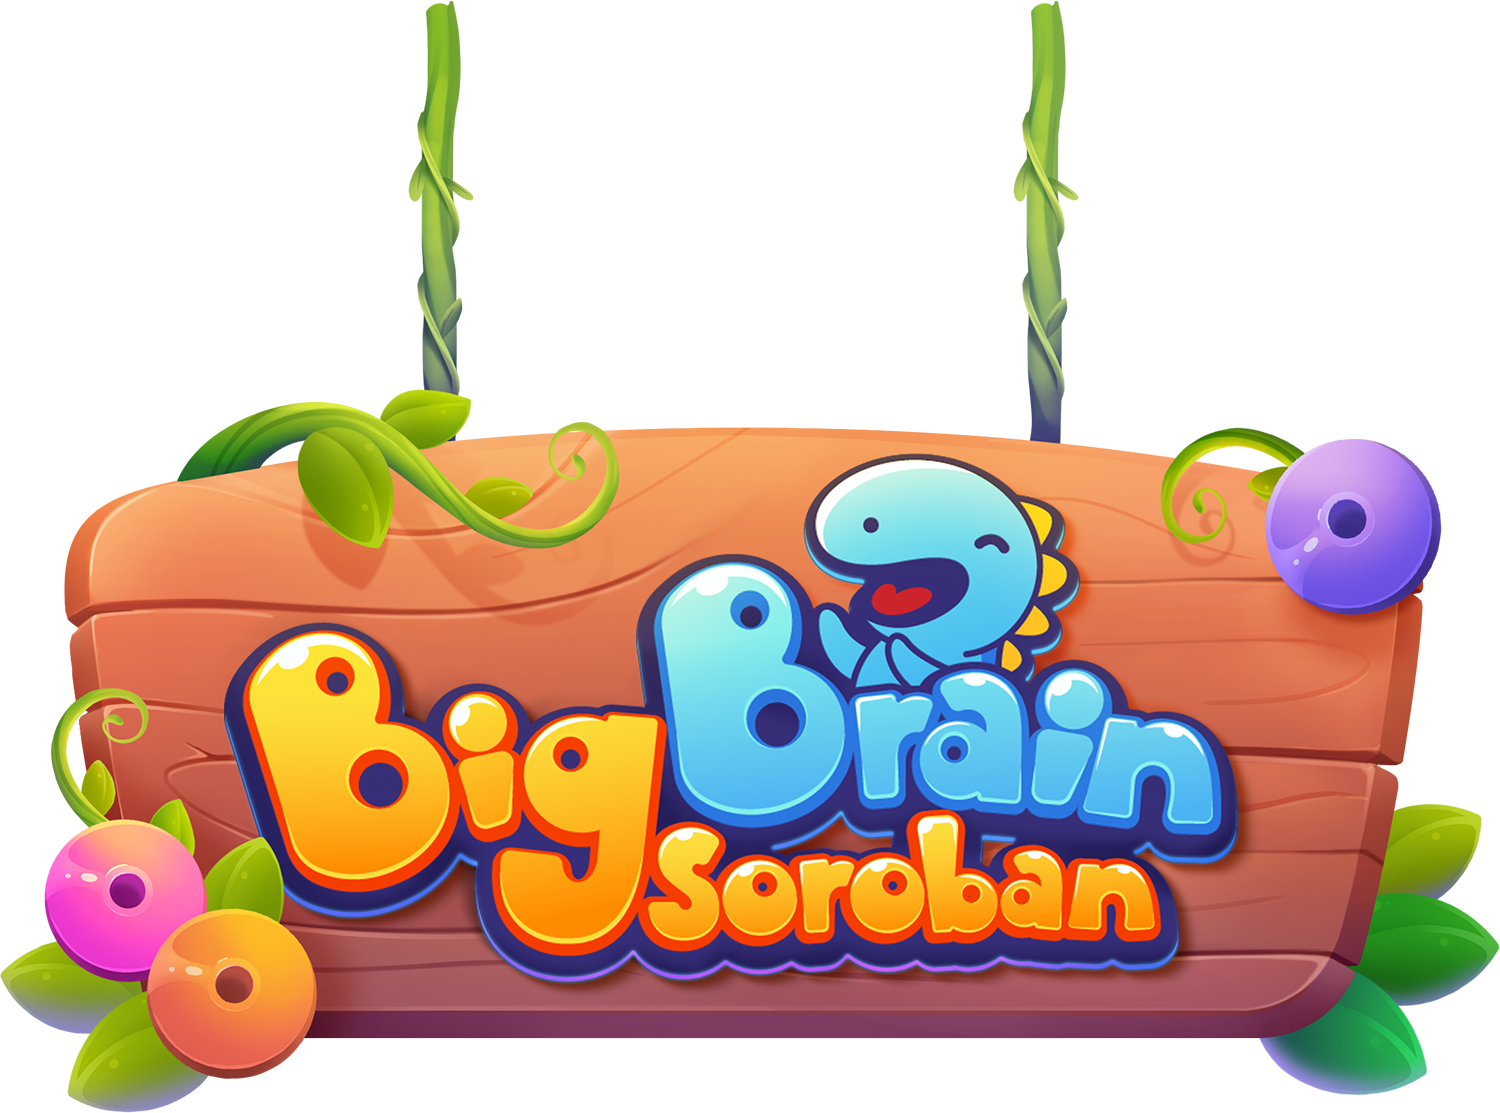 Big Brain Soroban - Soroban Applications